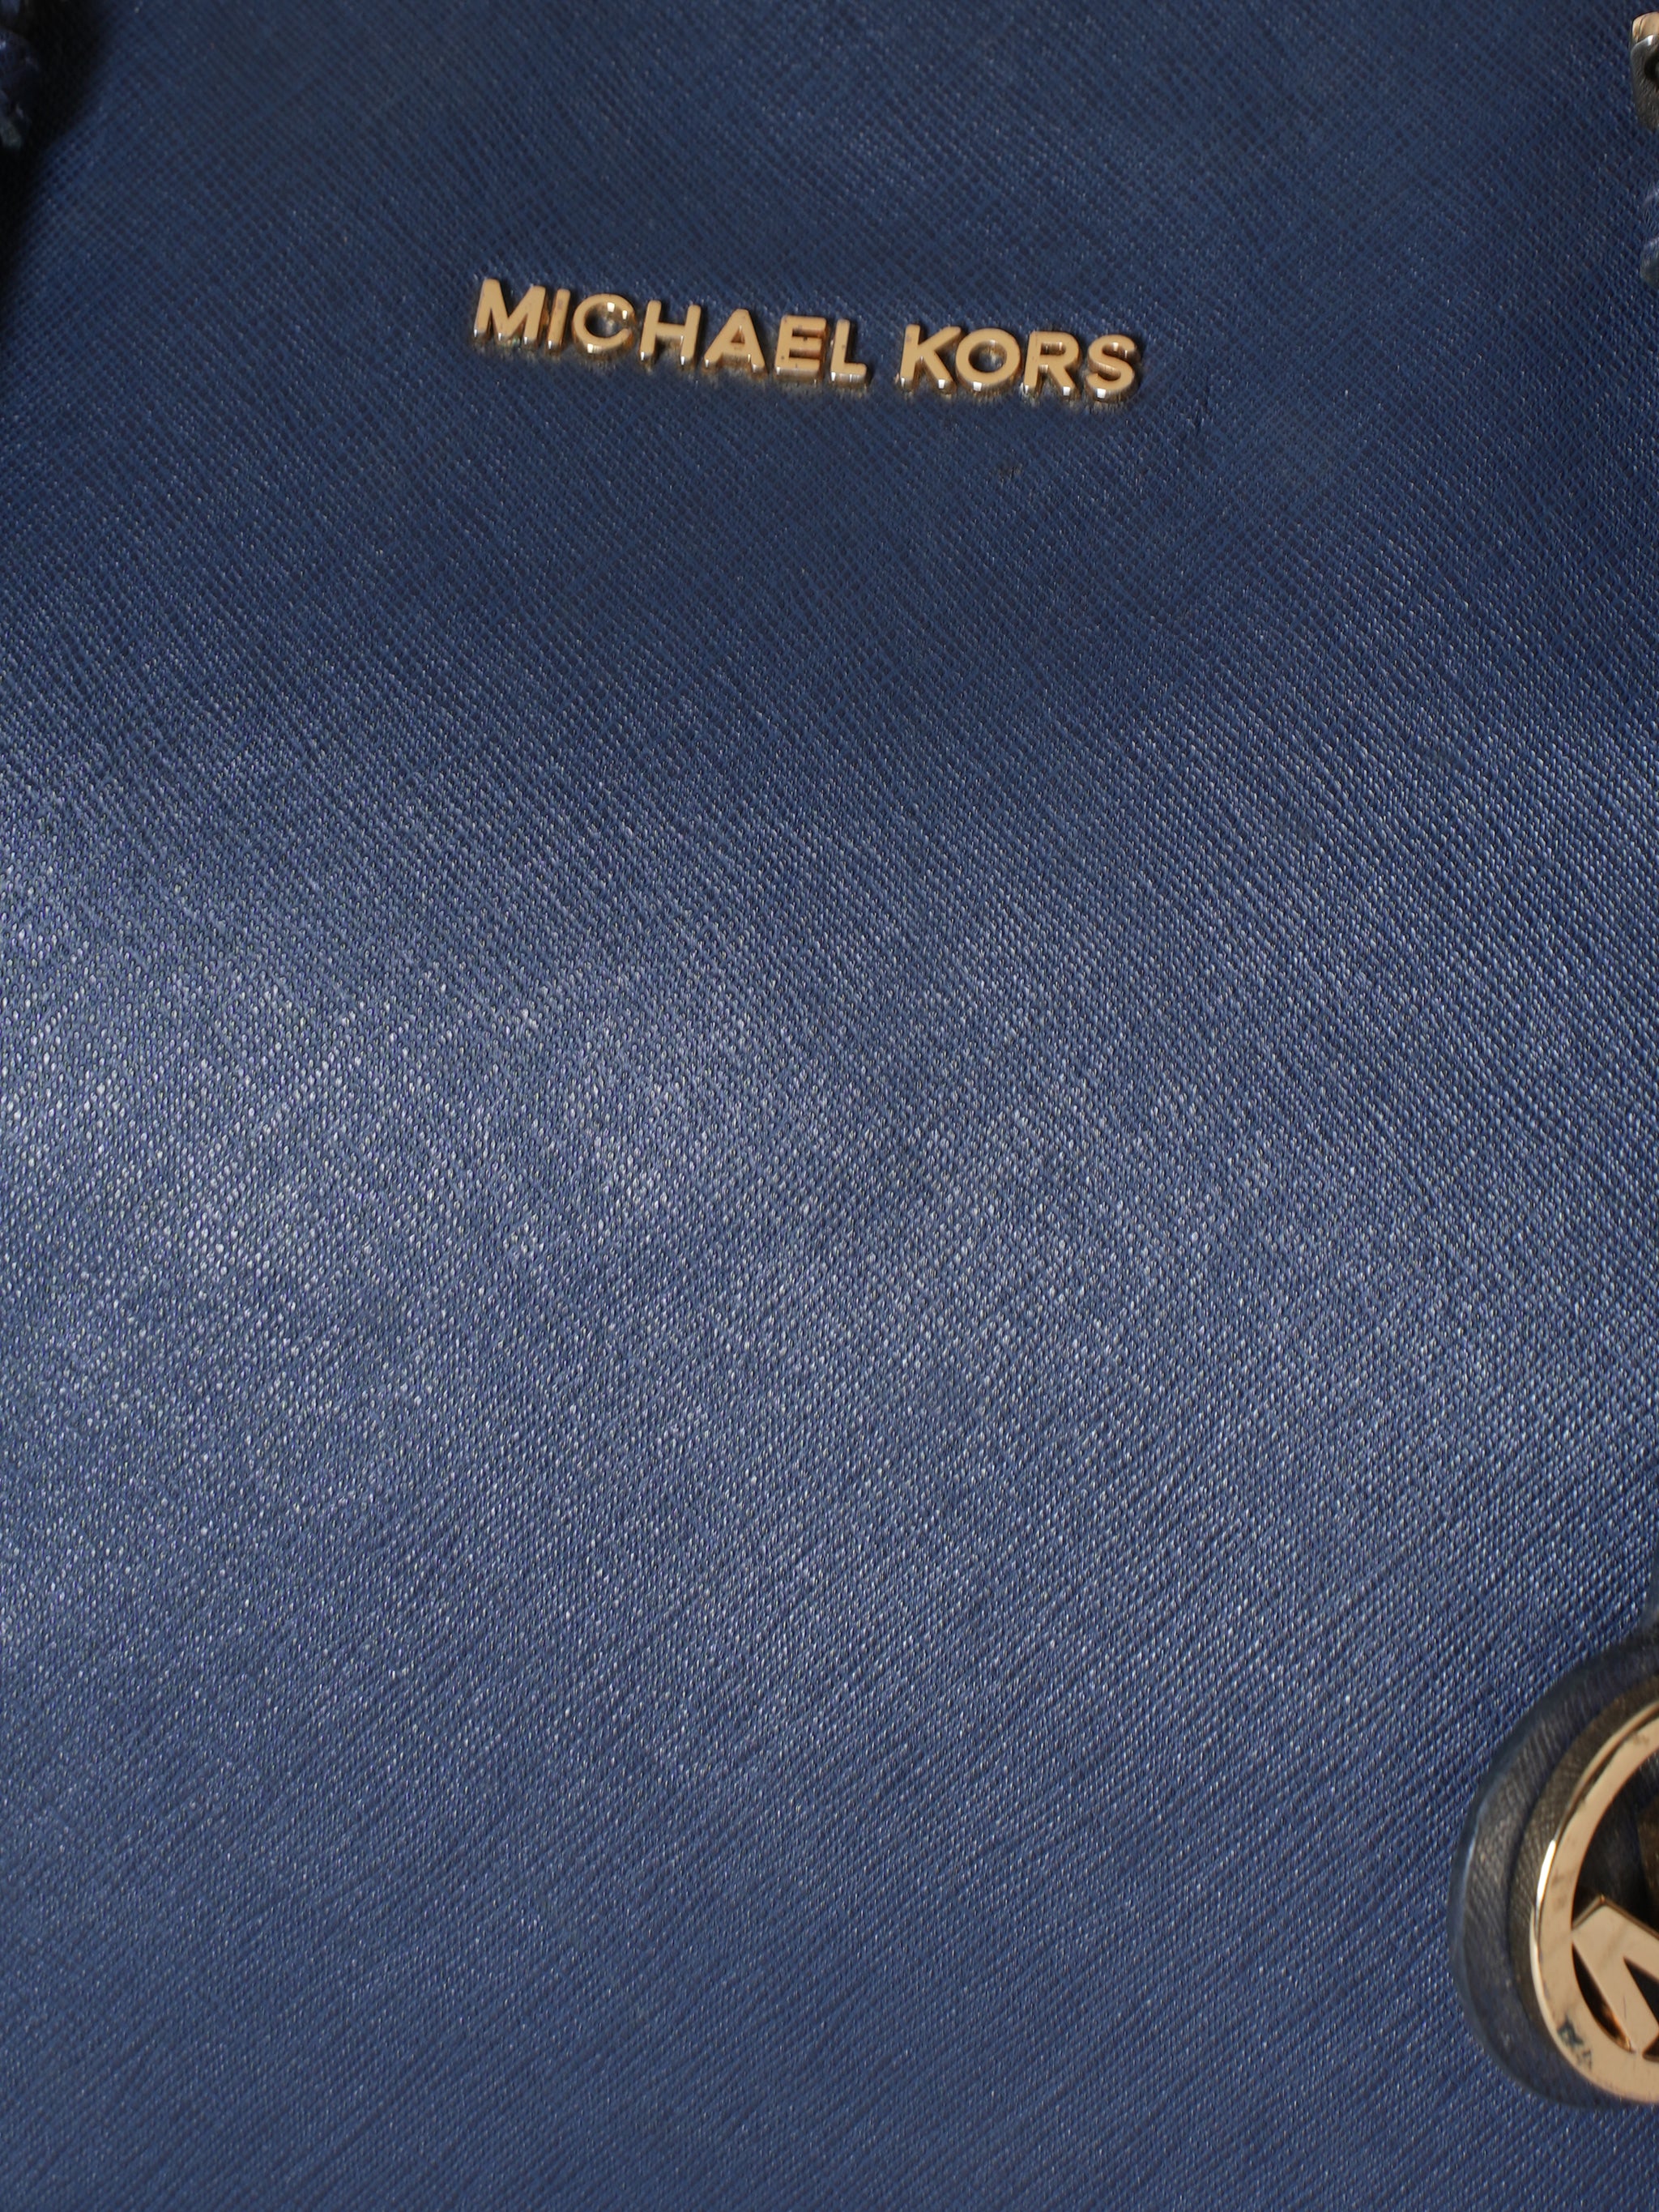 Michael Kors Blue Leather Medium Jet Set Top Zip Tote Bag